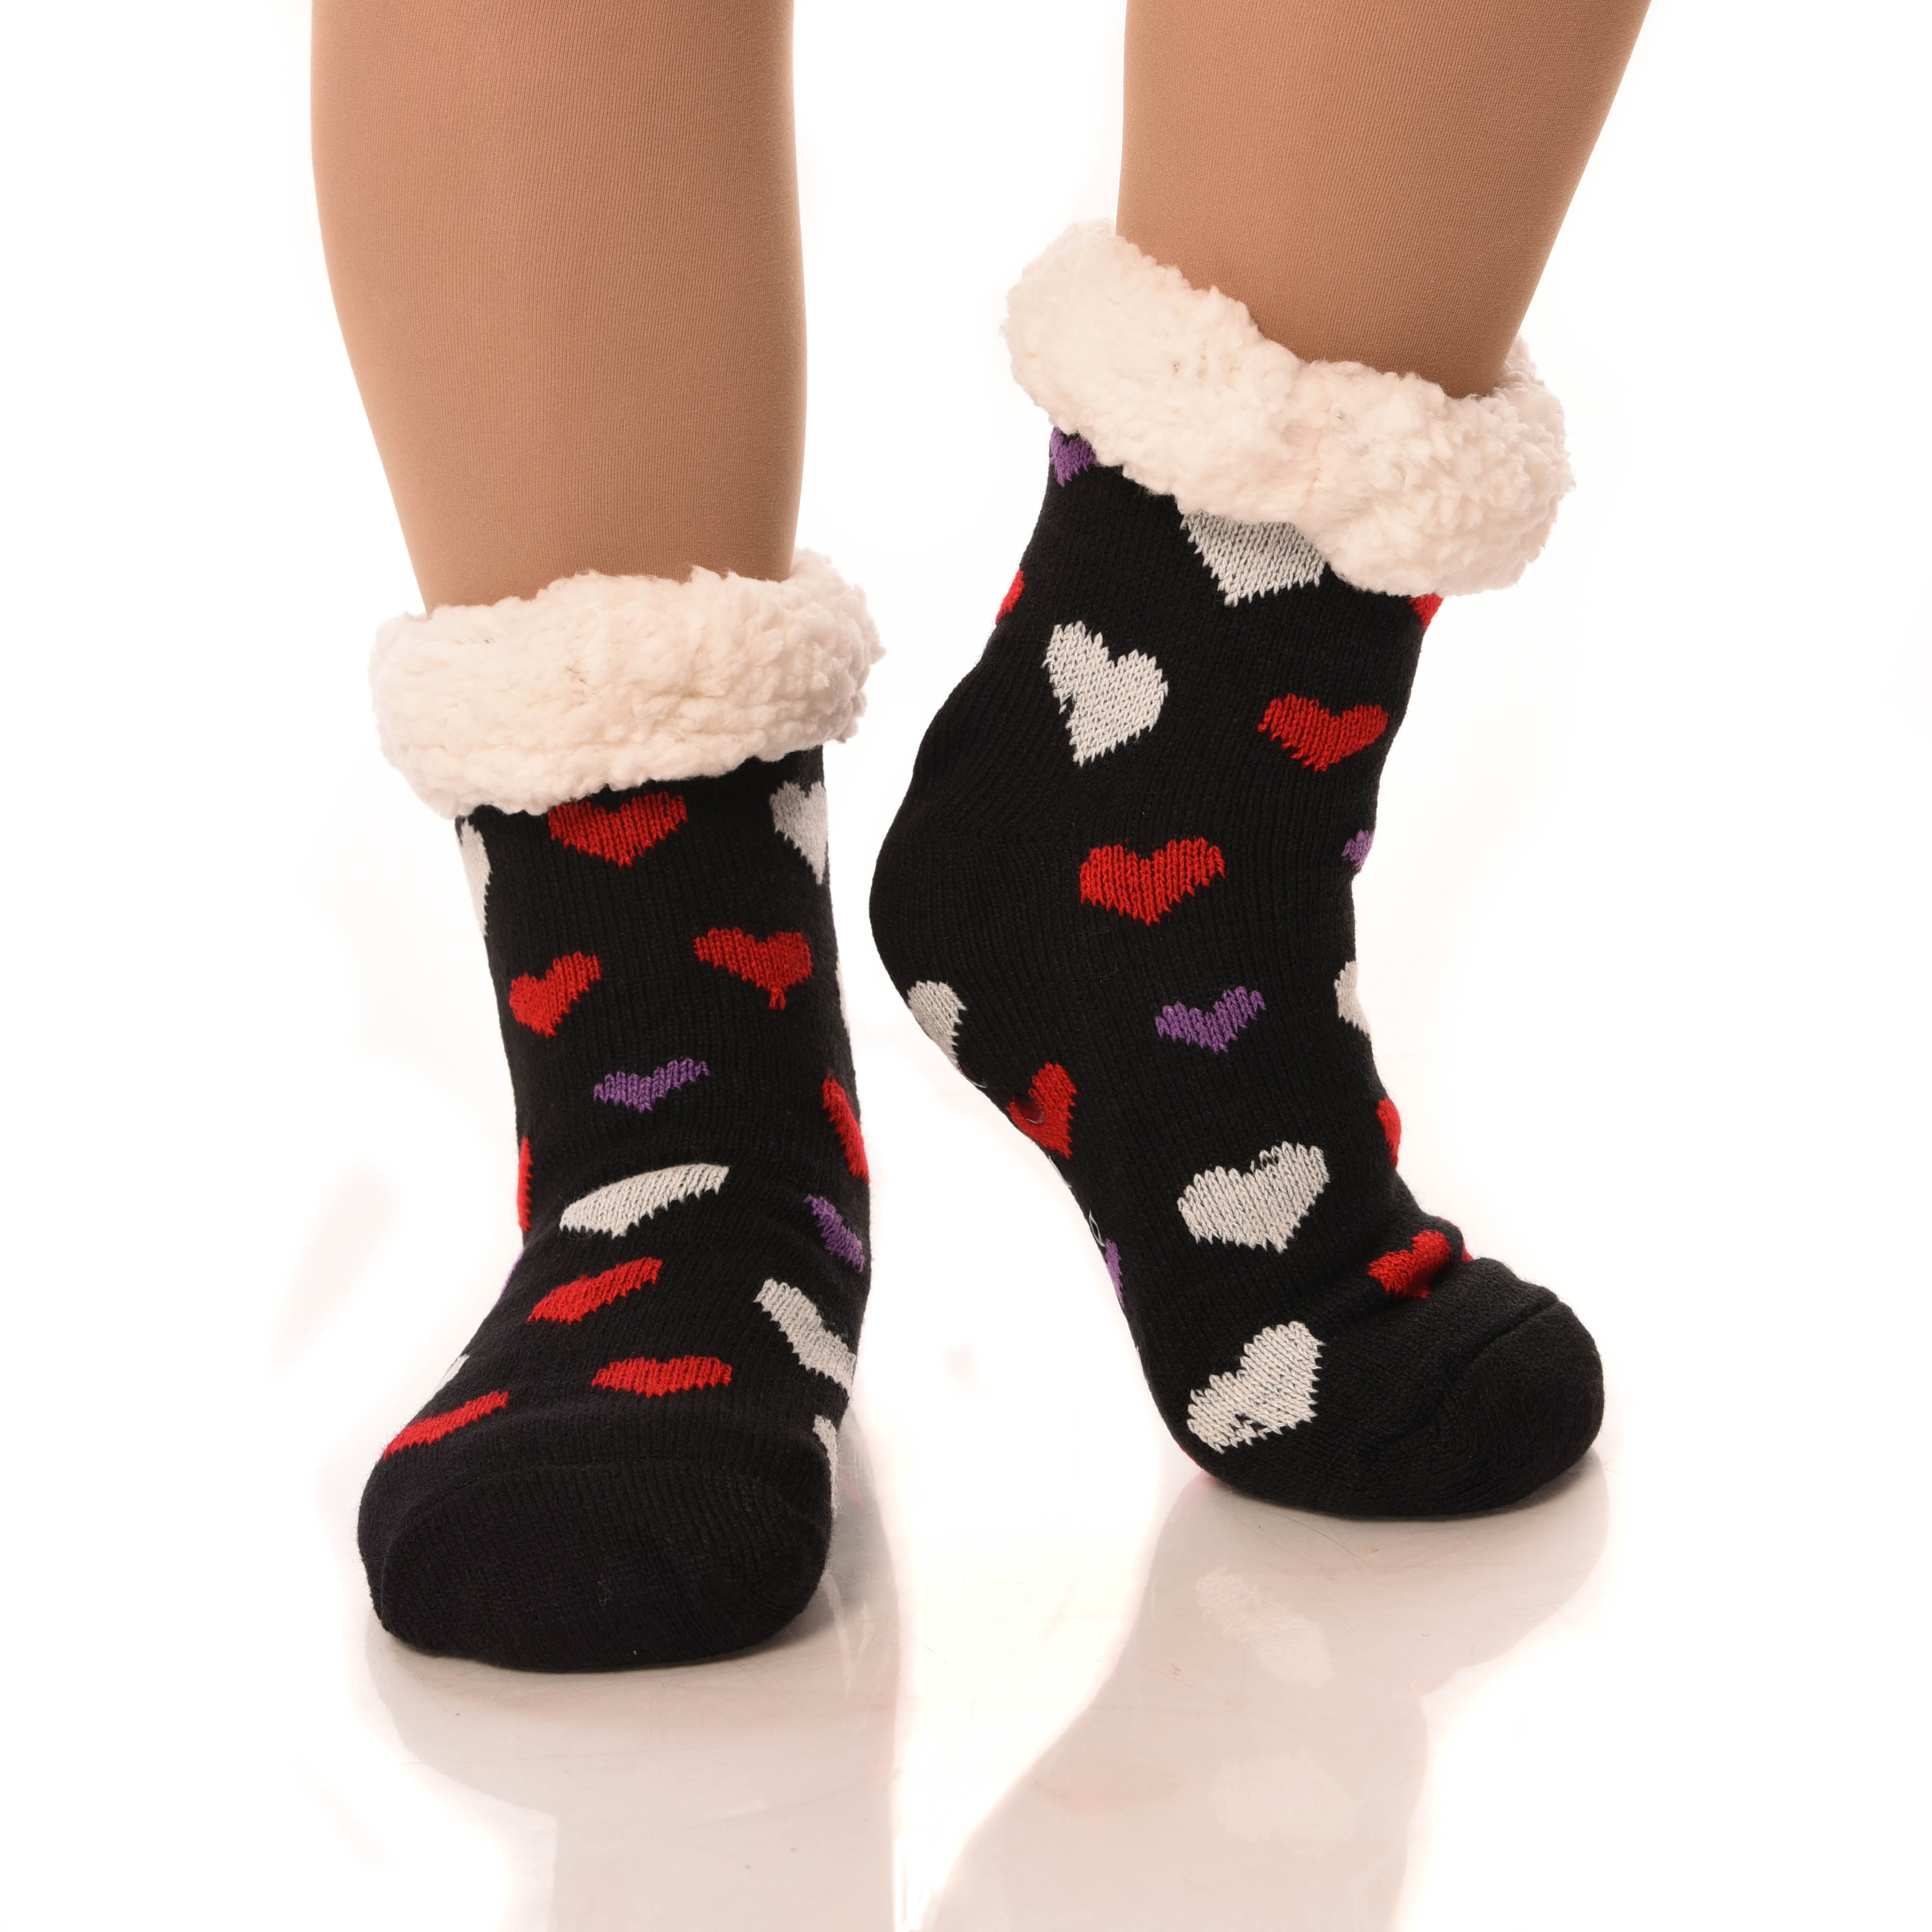 12 Pairs Fuzzy Socks Women Girl Long Knee High Cozy Winter Slipper Warm Lot 9-11